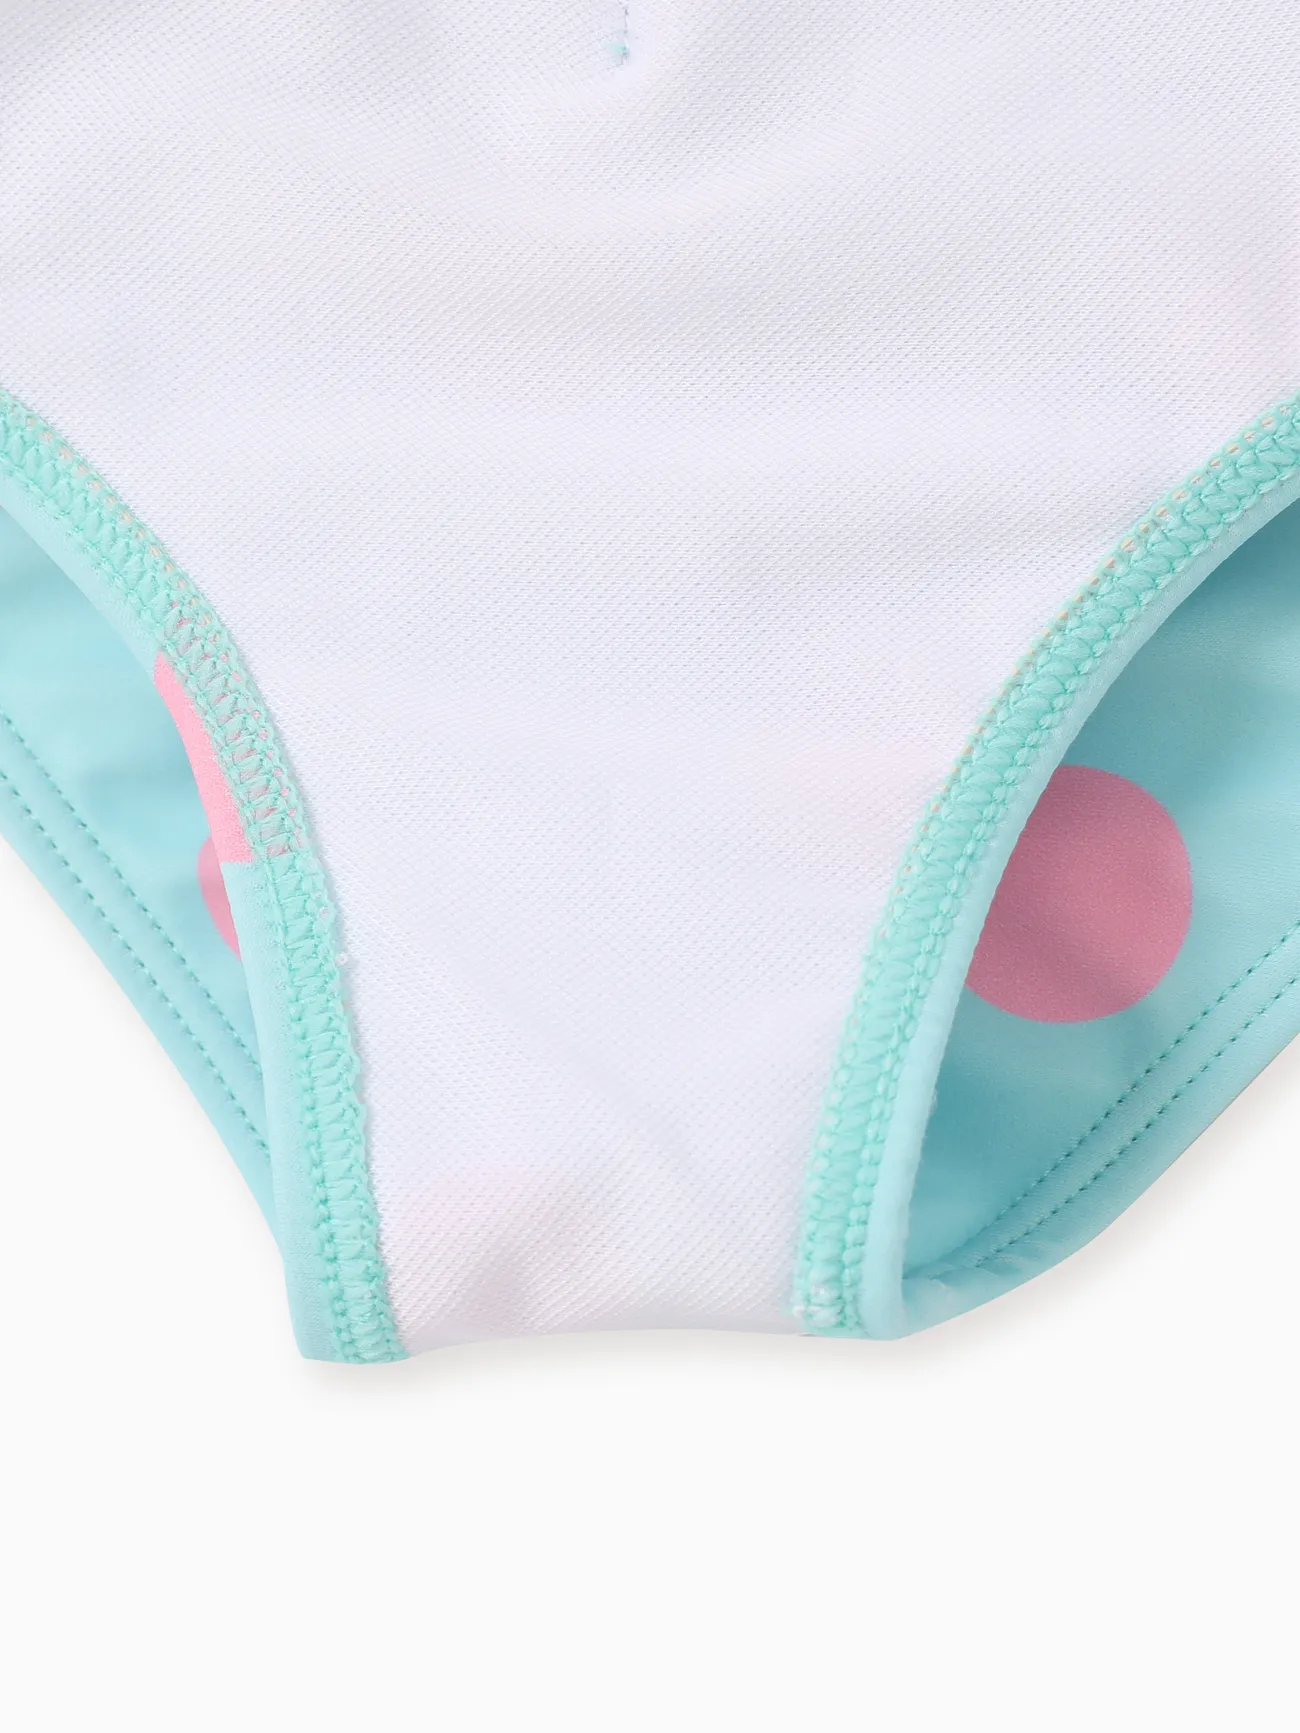 Toddler Girl Cat/Flamingo Applique Polka Dots Print Ruffled One-Piece Swimsuit Mintblue big image 1